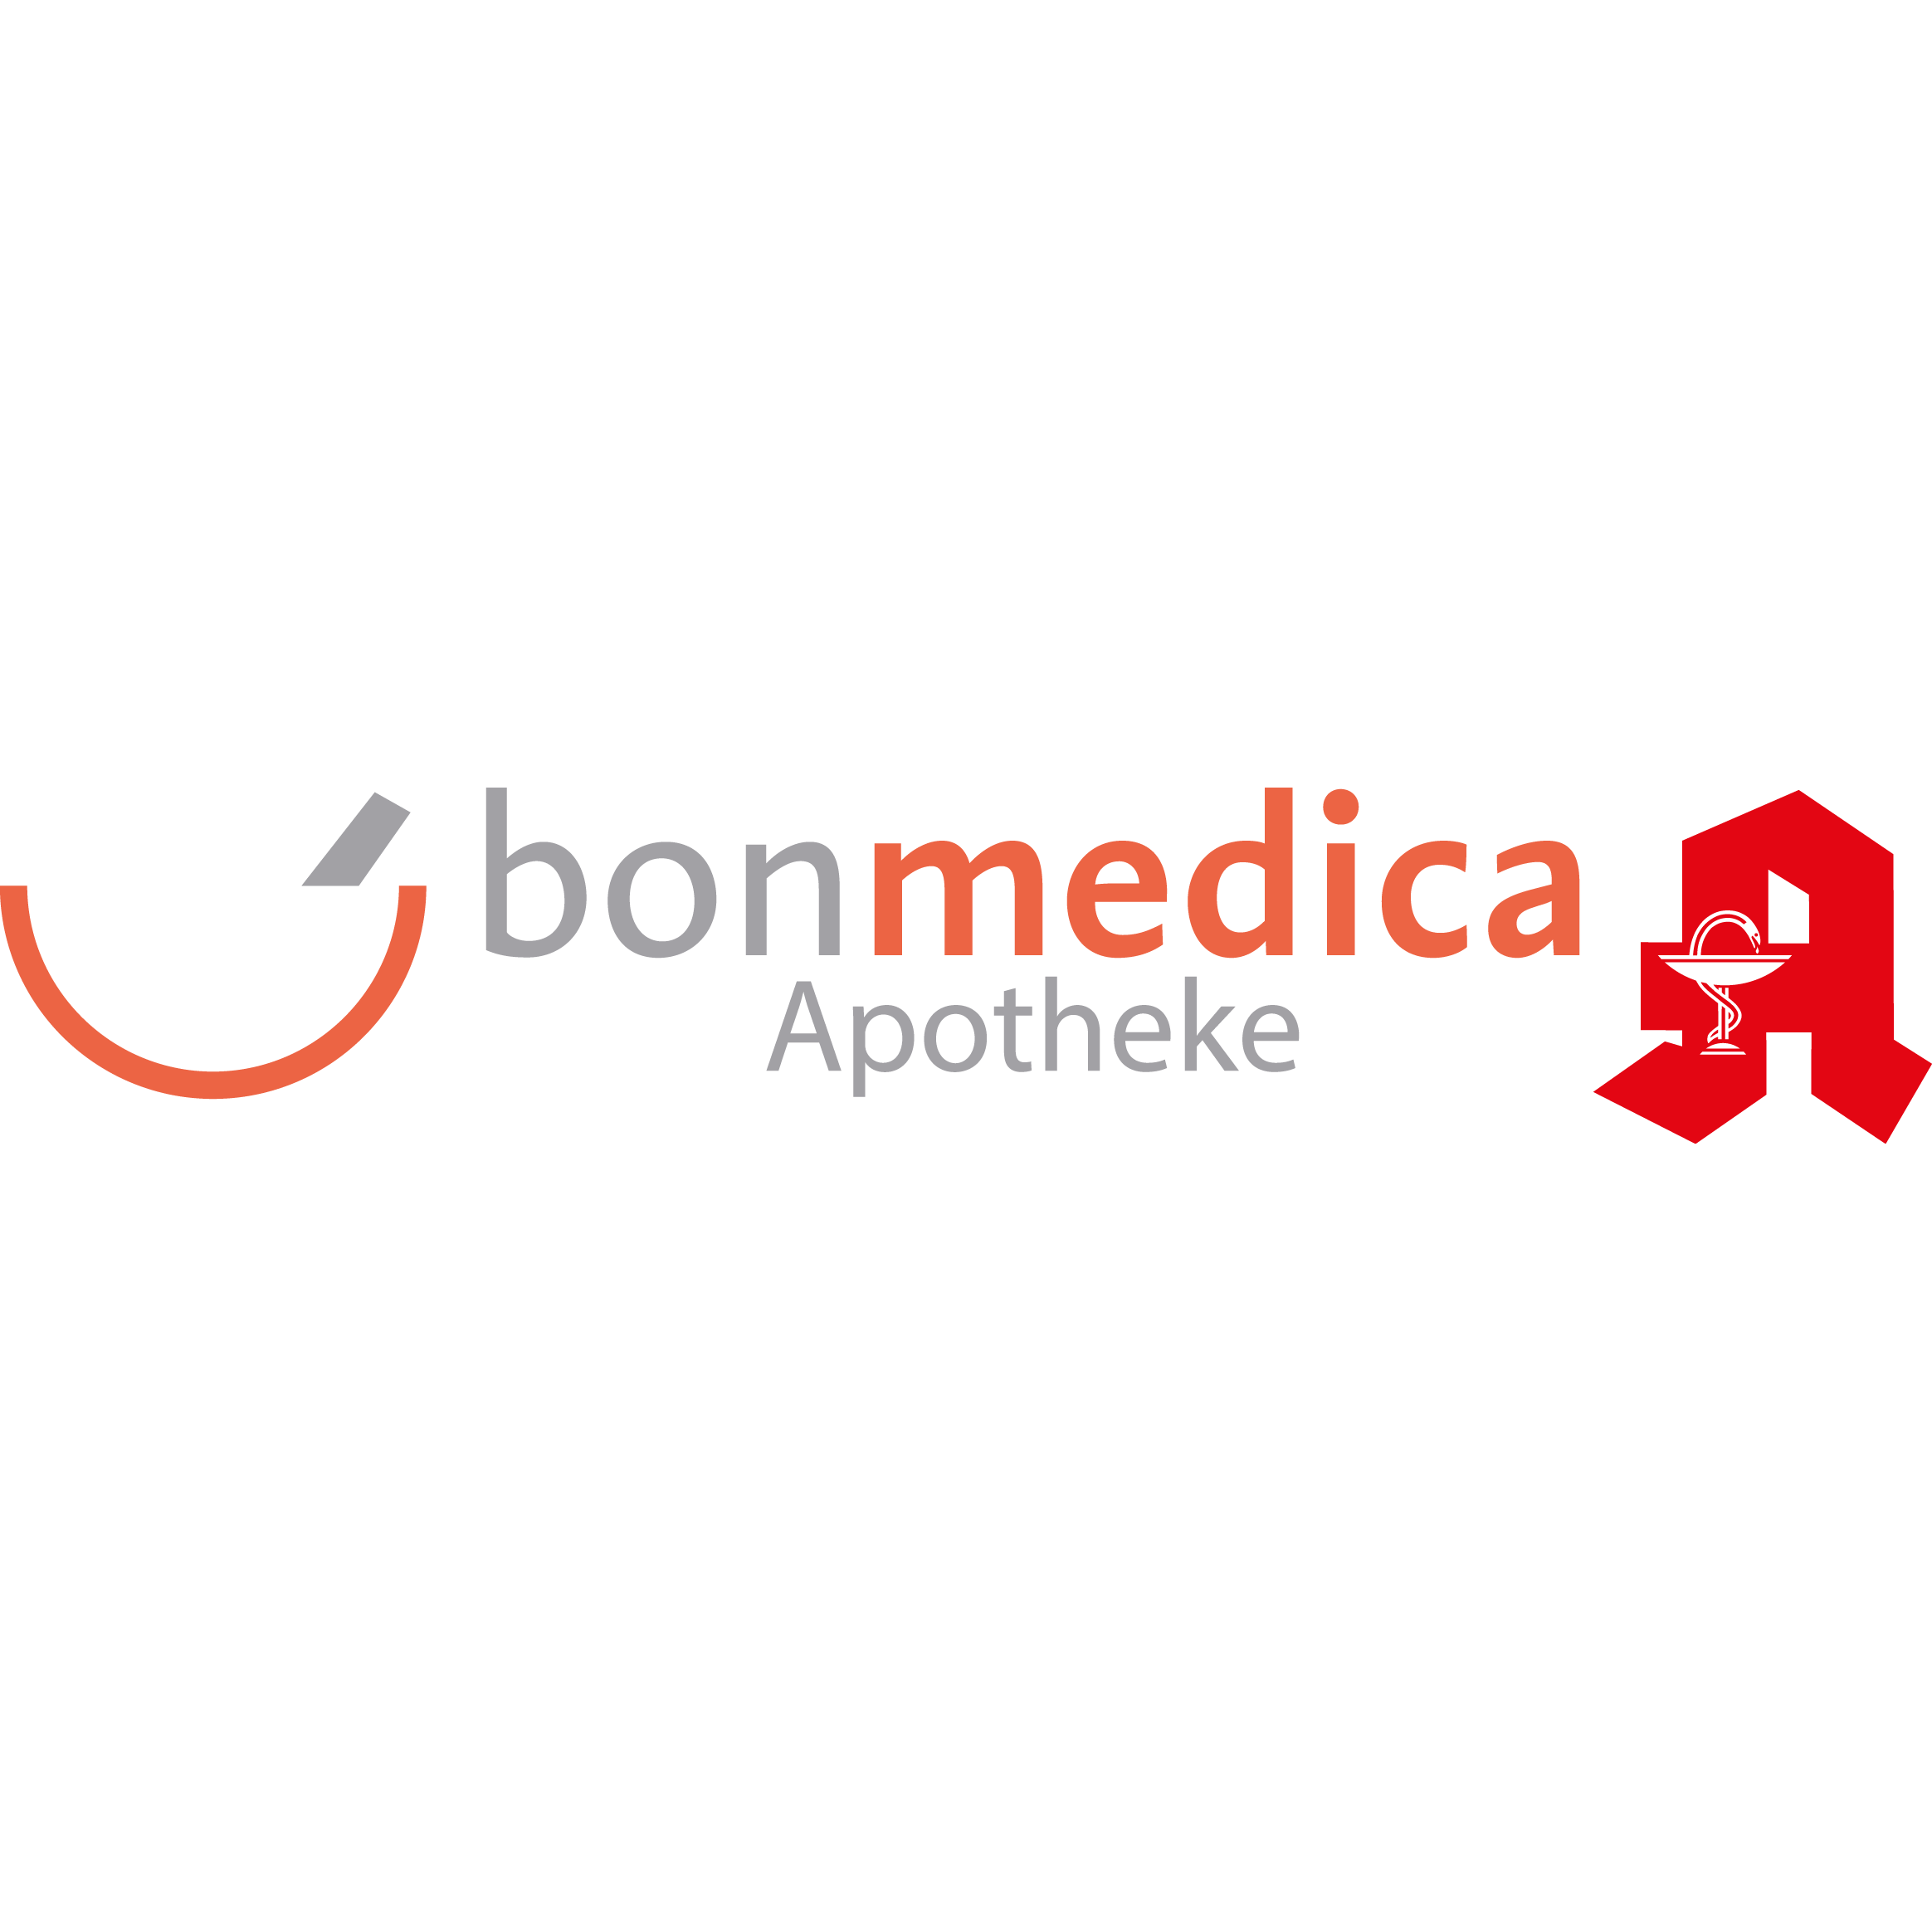 Bonmedica Apotheke in Gößweinstein - Logo